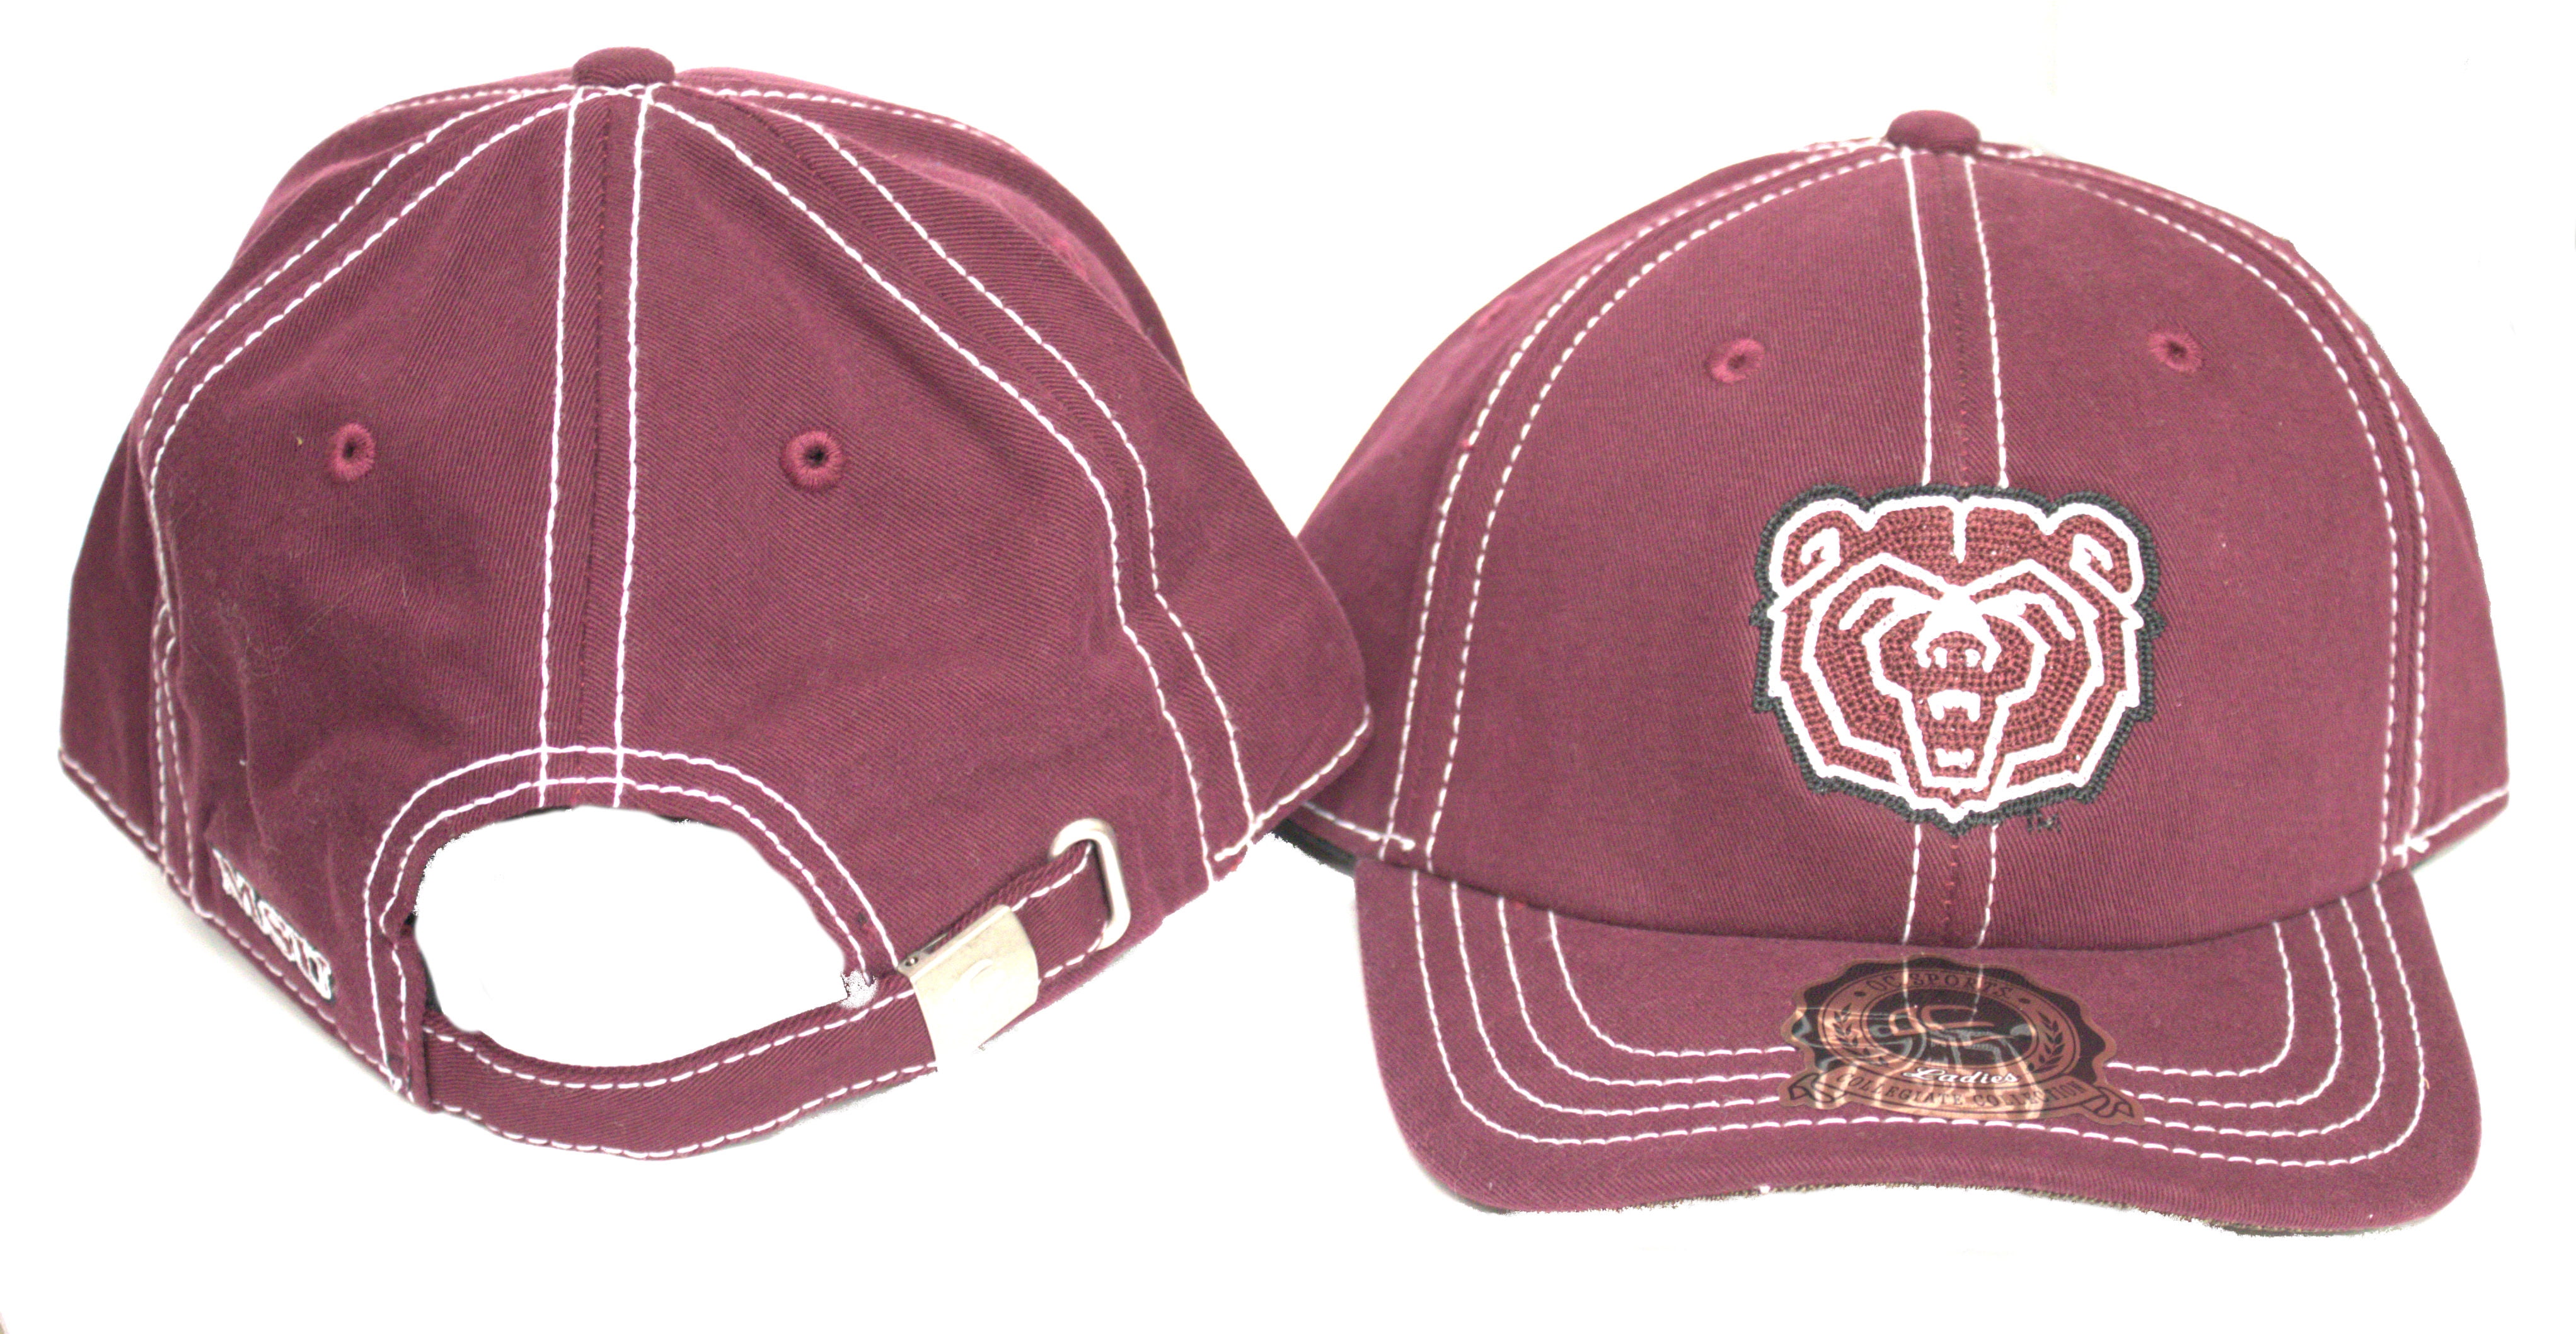 Southeast SEMO Missouri State Redhawks NCAA Fitted Flat Bill Baseball Cap Hat 